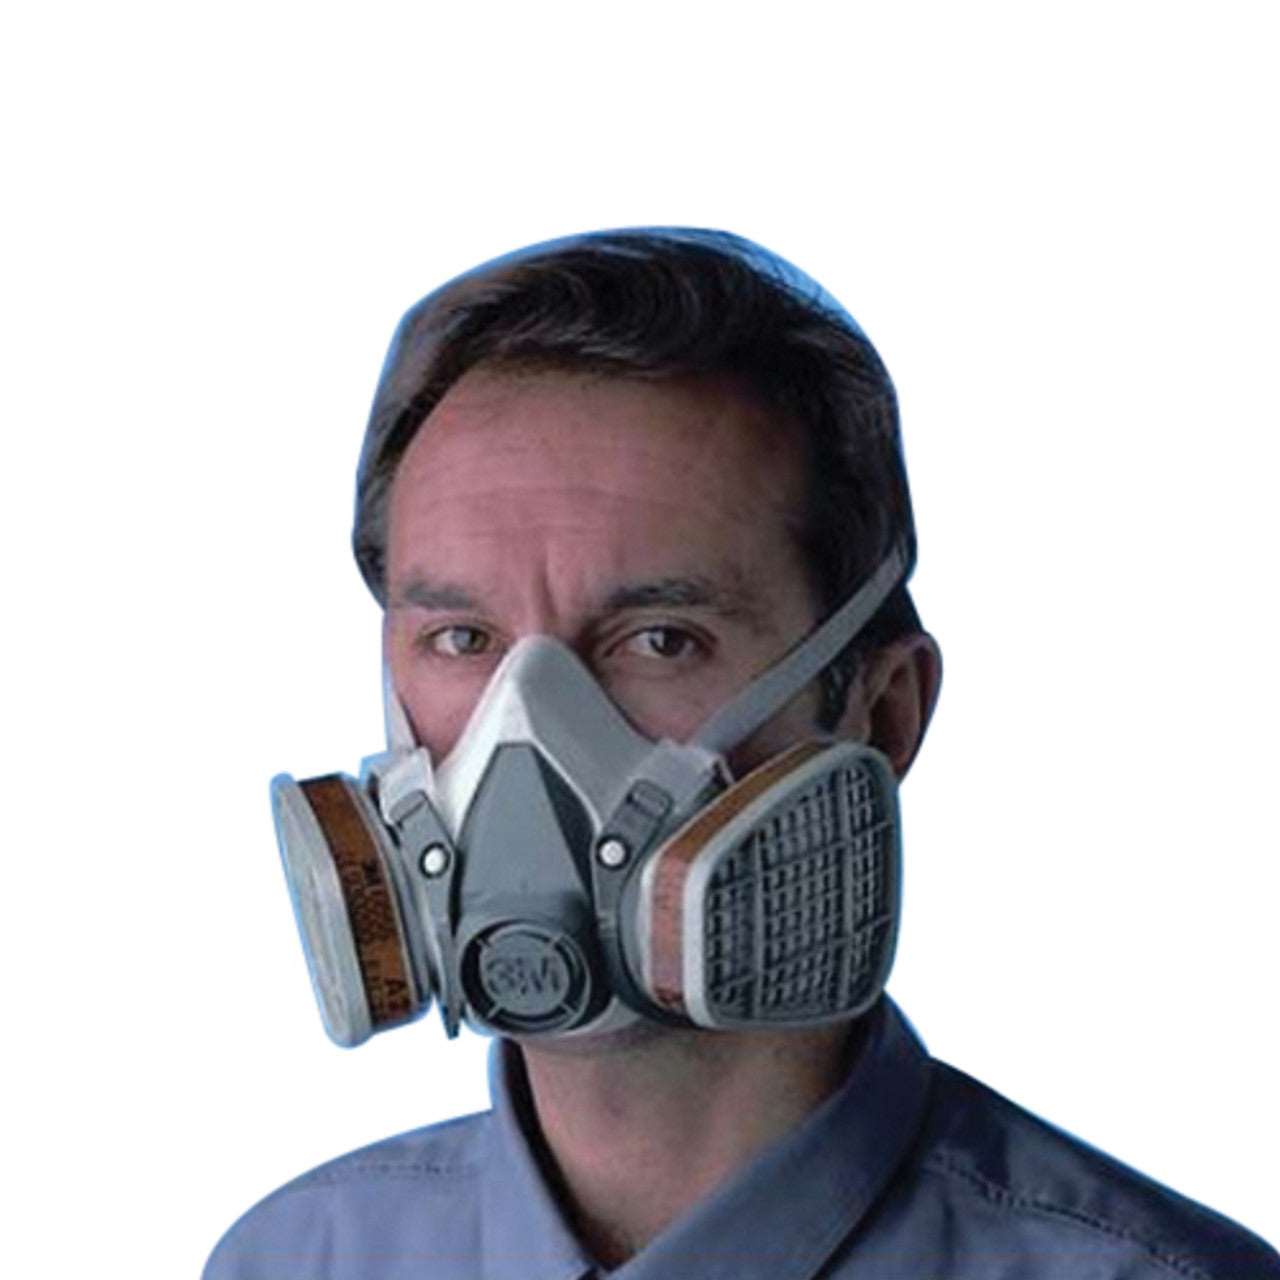 3M Reusable Half Mask Respirator 6000 Series Power Tool Services